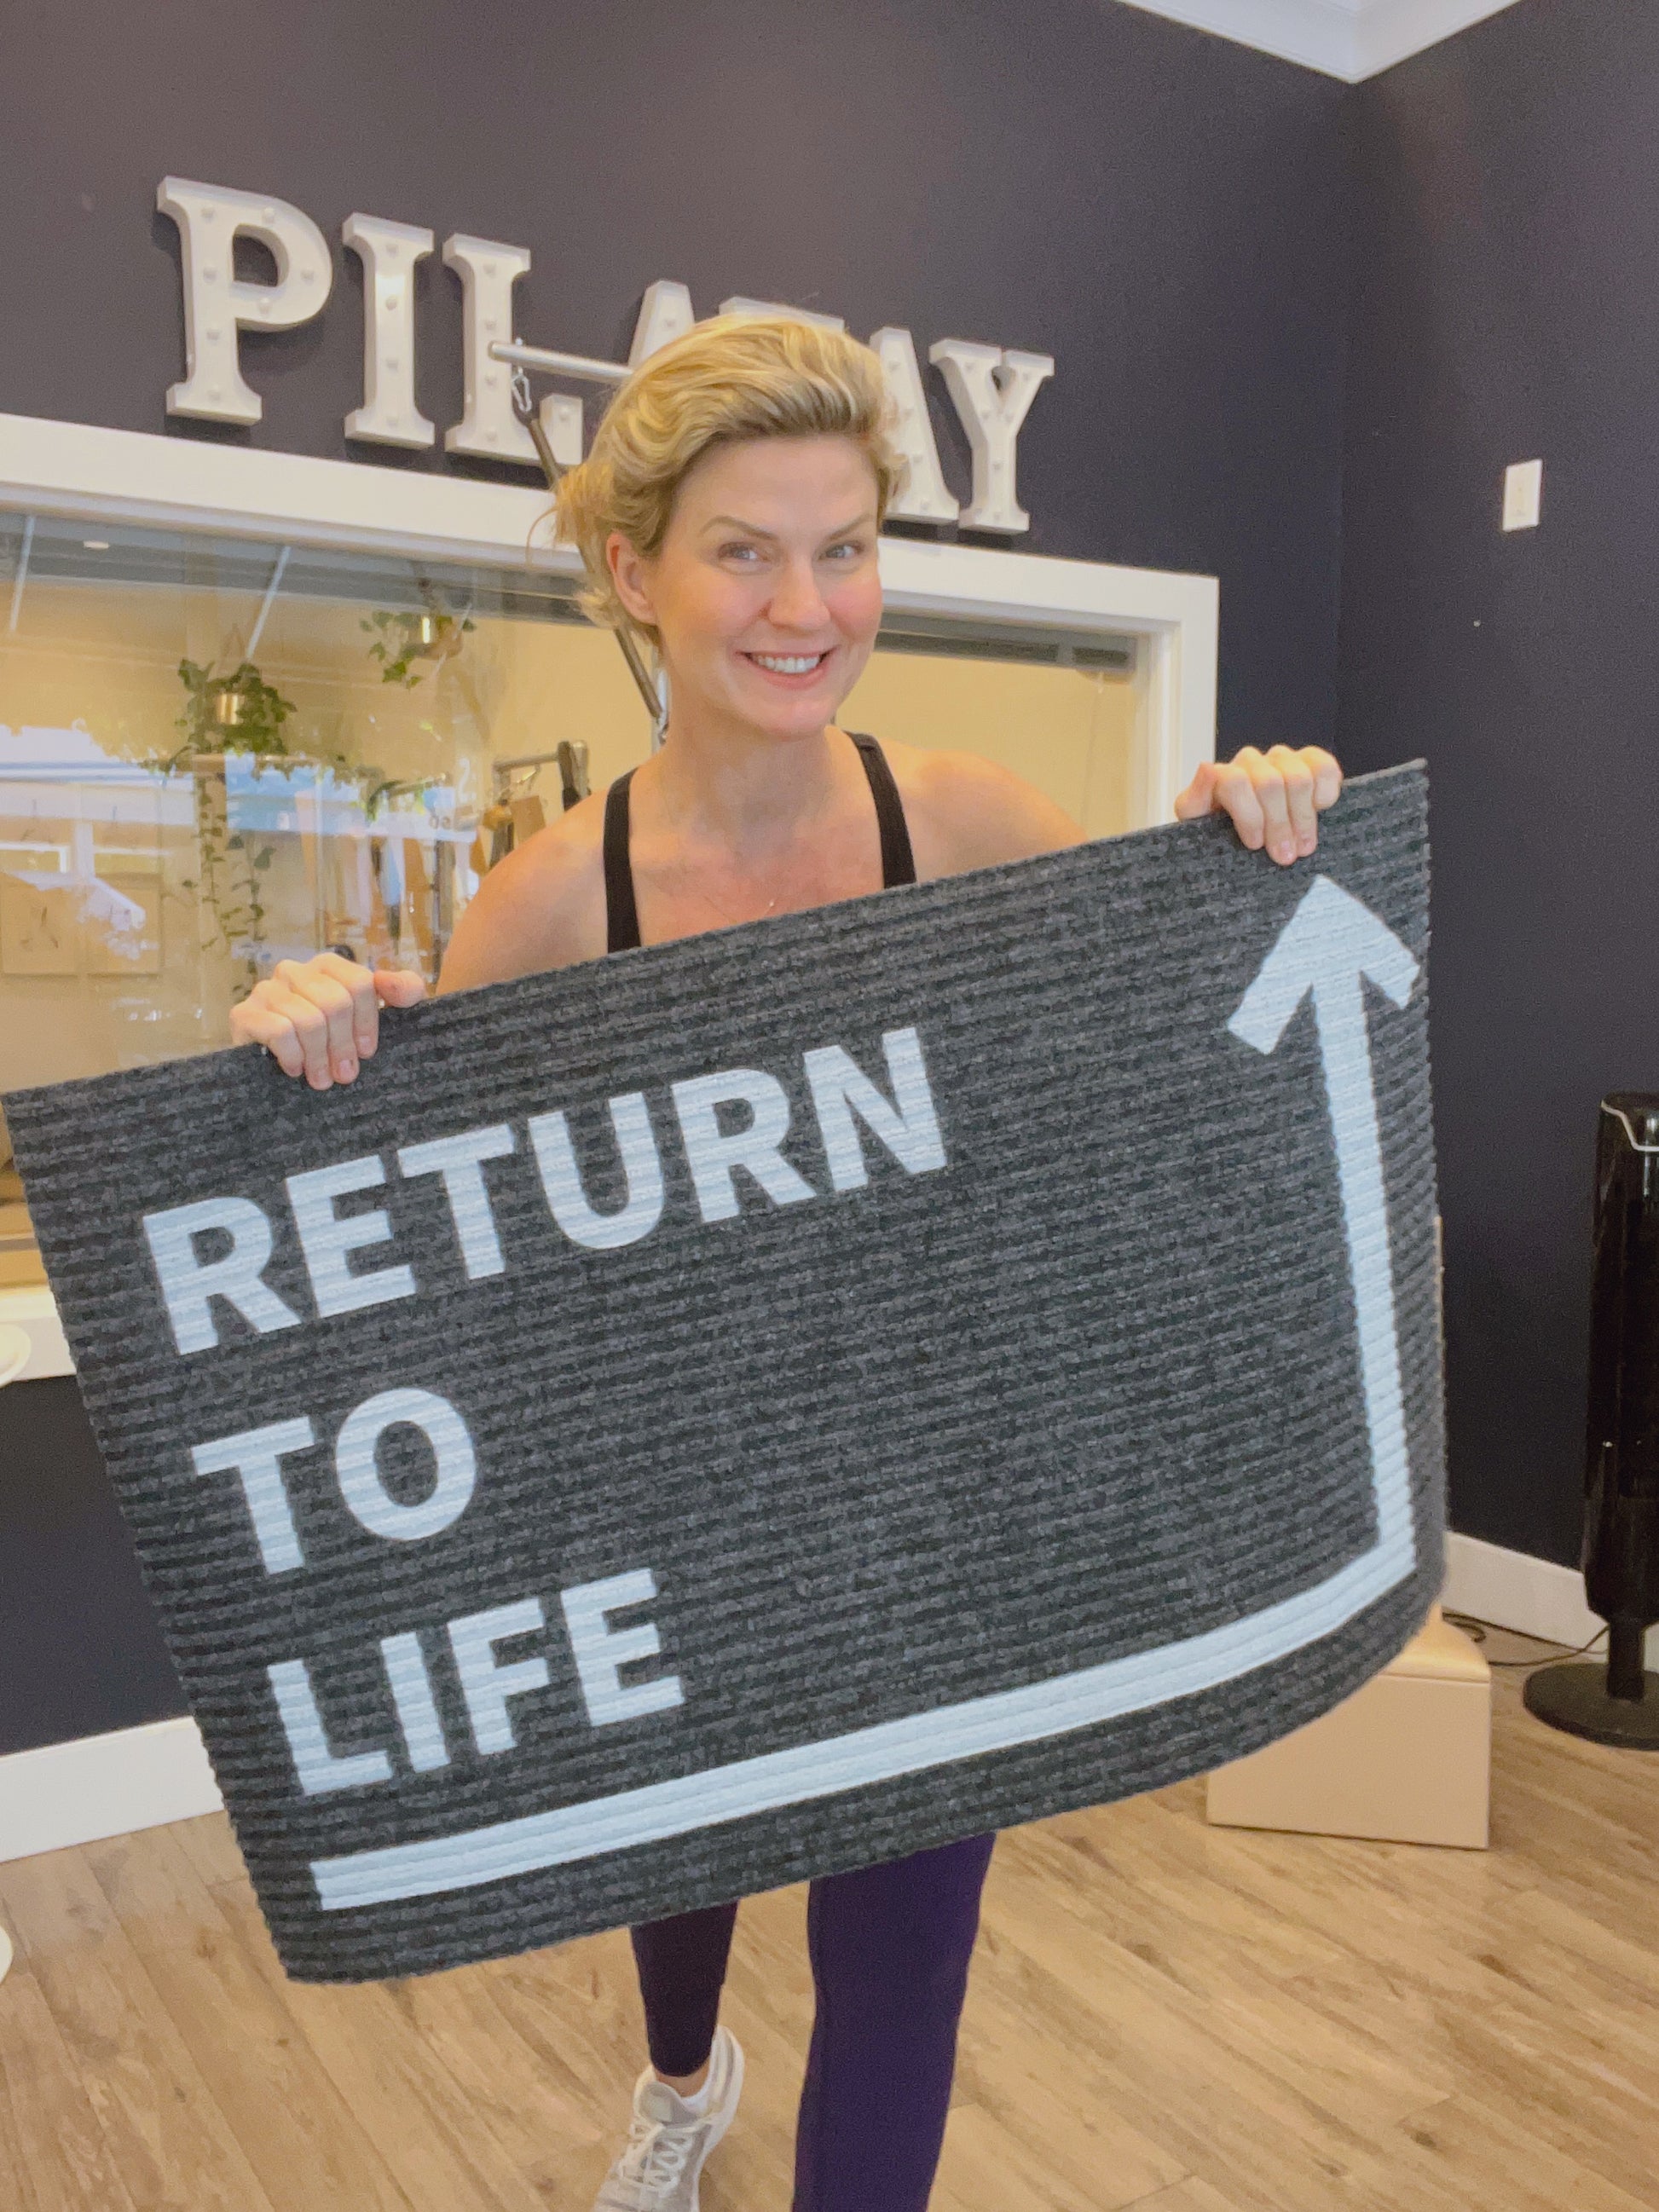 Pilates Studio door mat - return to life by Joseph Pilates - gifts for pilates teachers